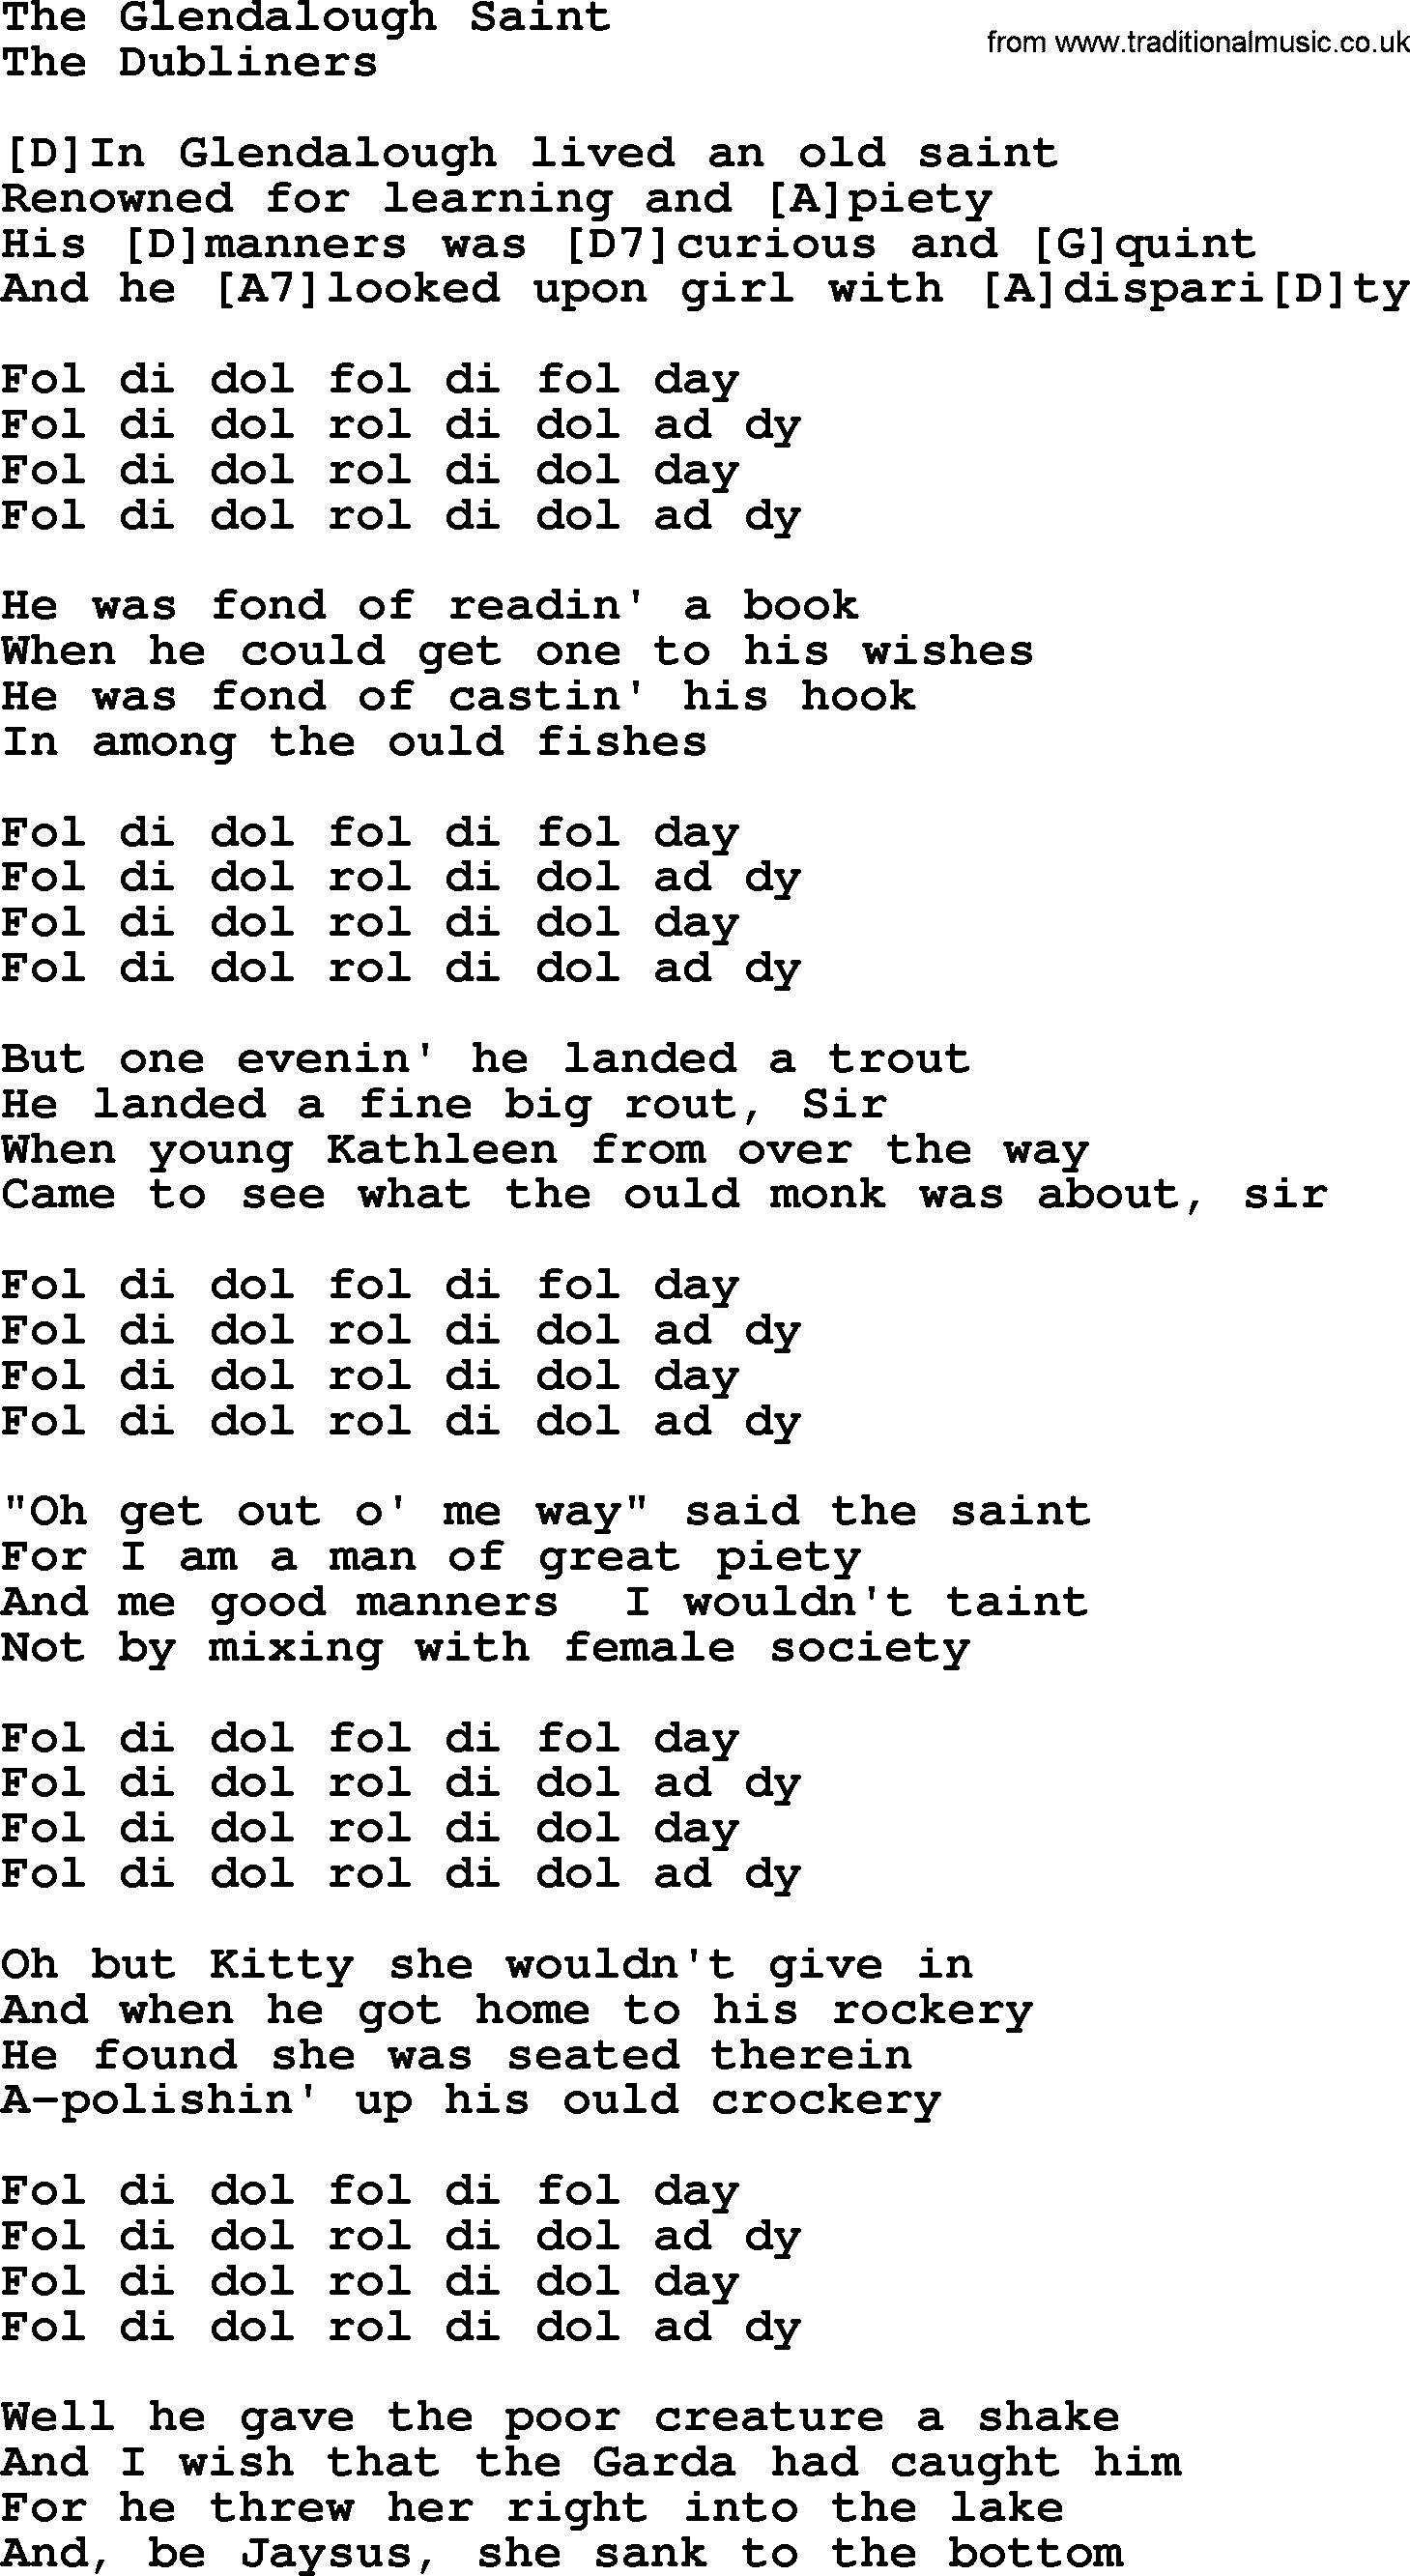 The Dubliners song: The Glendalough Saint, lyrics and chords